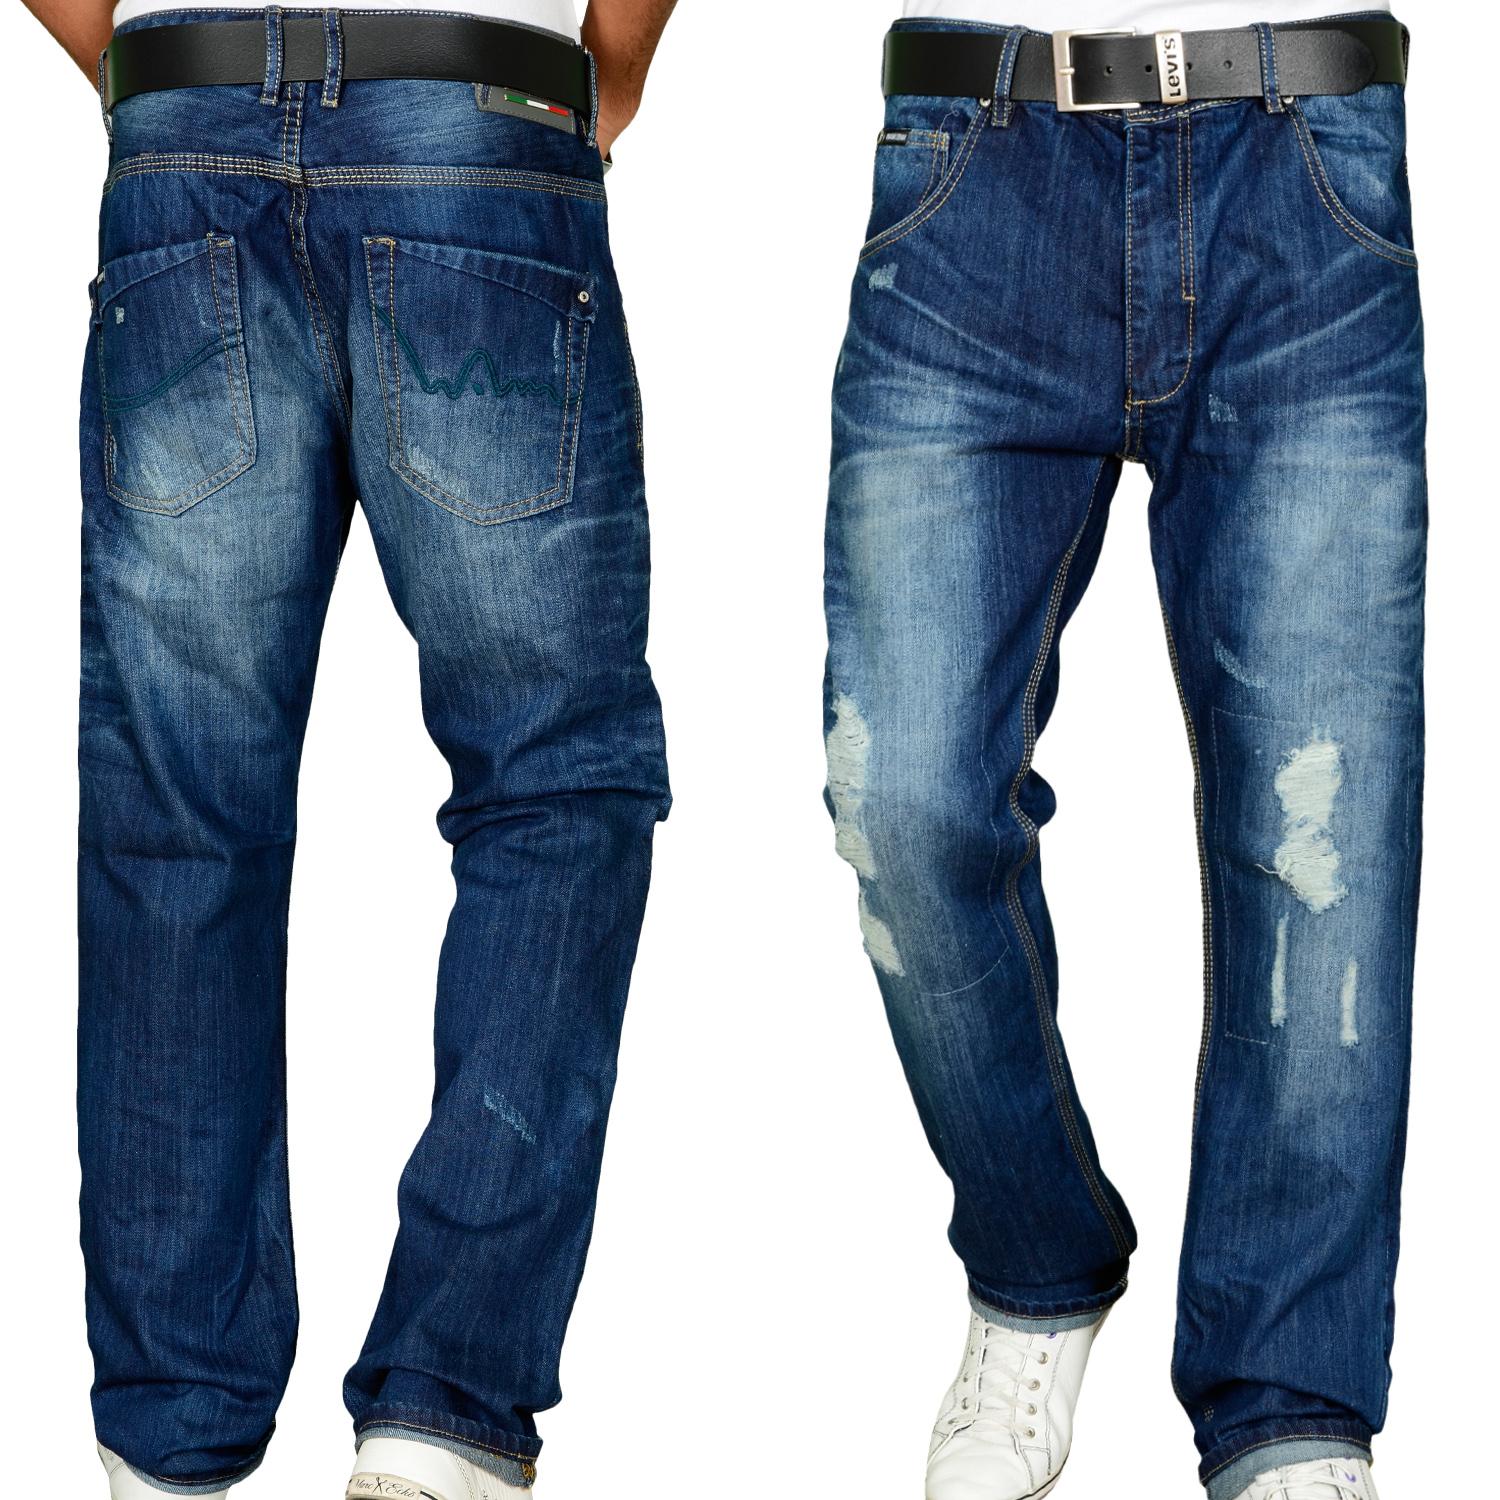 Foto Wam Denim Regular Fit Jeans De Color Azul Oscuro foto 136876